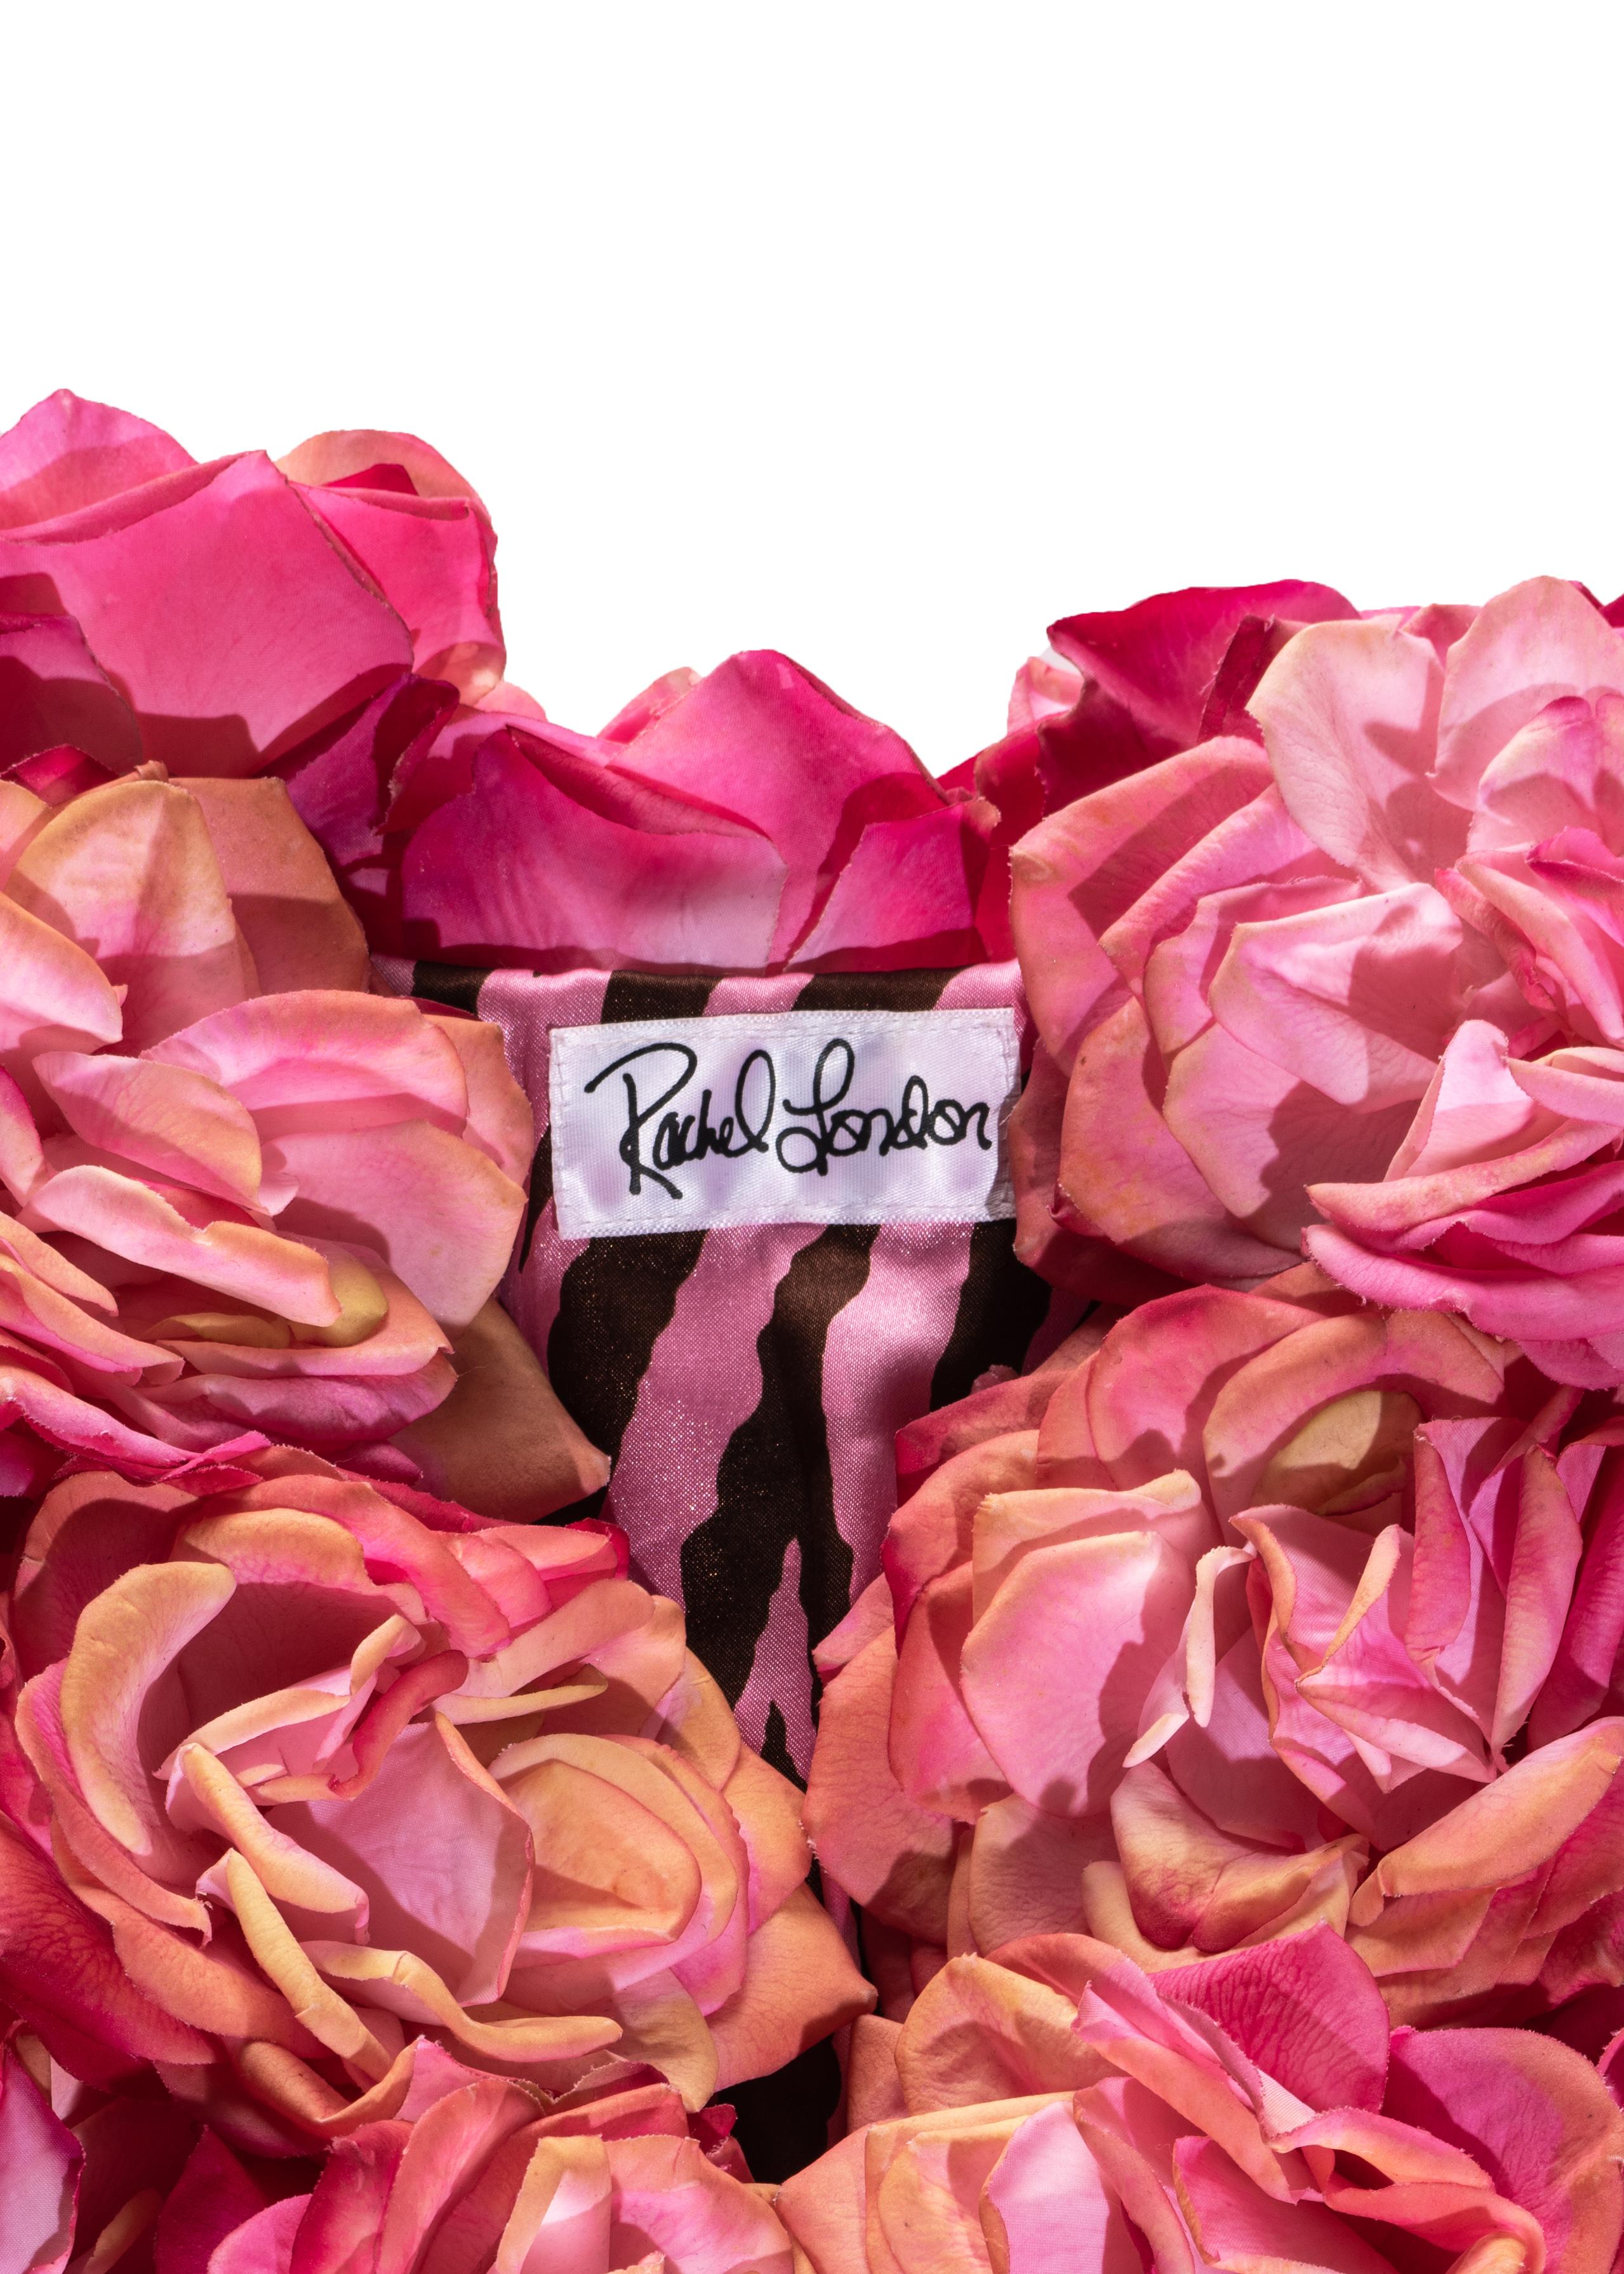 Rachel London pink rose bolero jacket, c. 1988 3